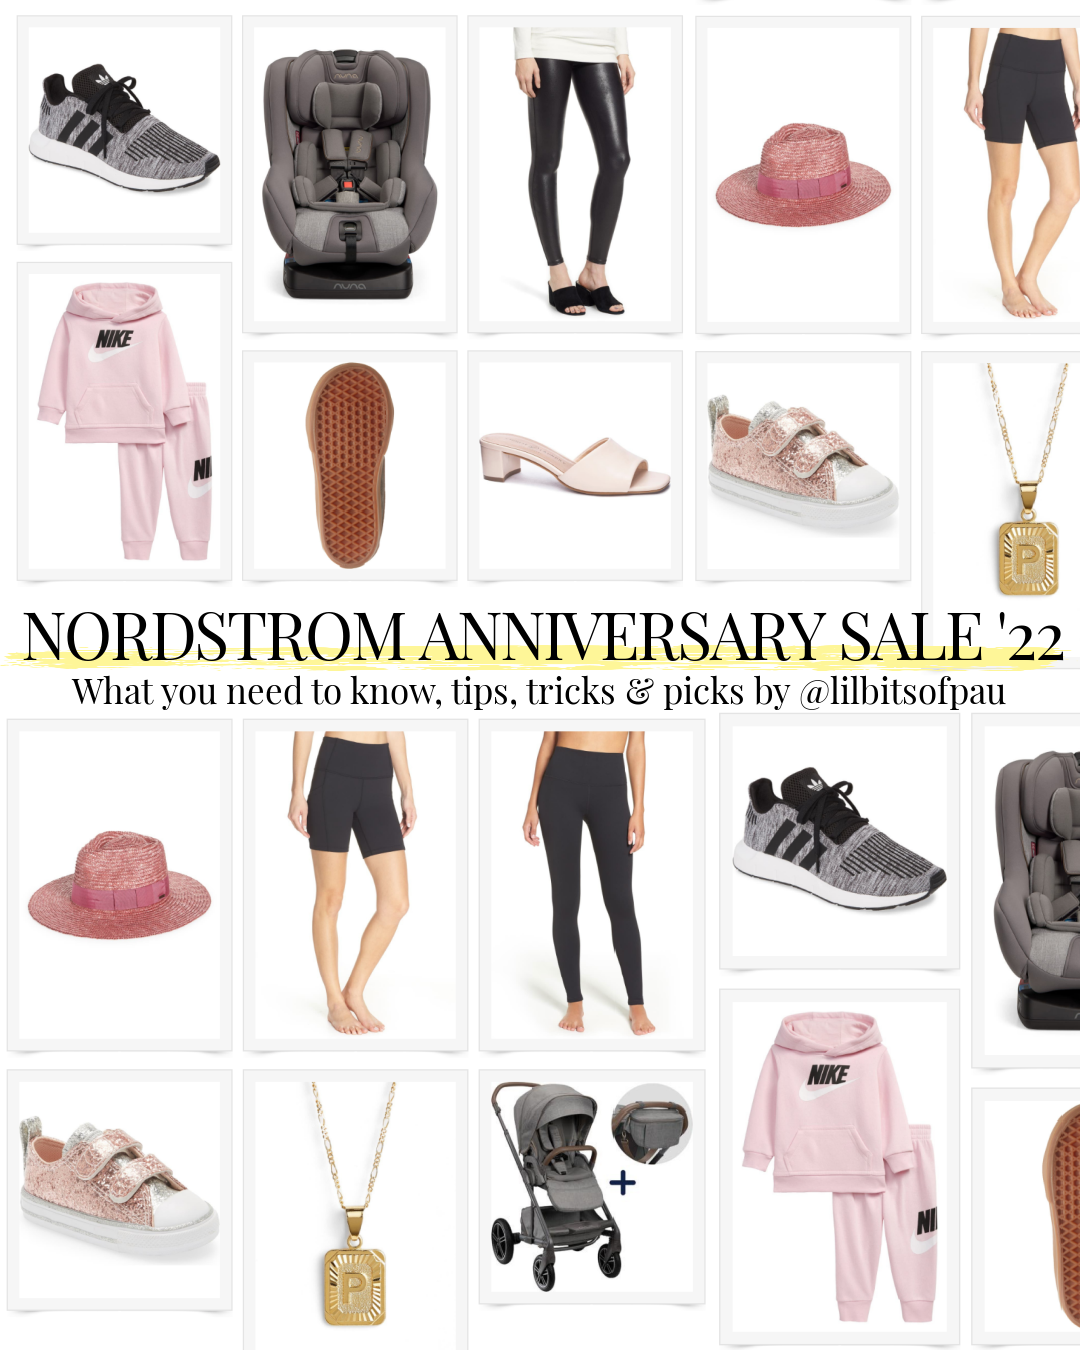 Nordstrom Anniversary Sale Tips & Info